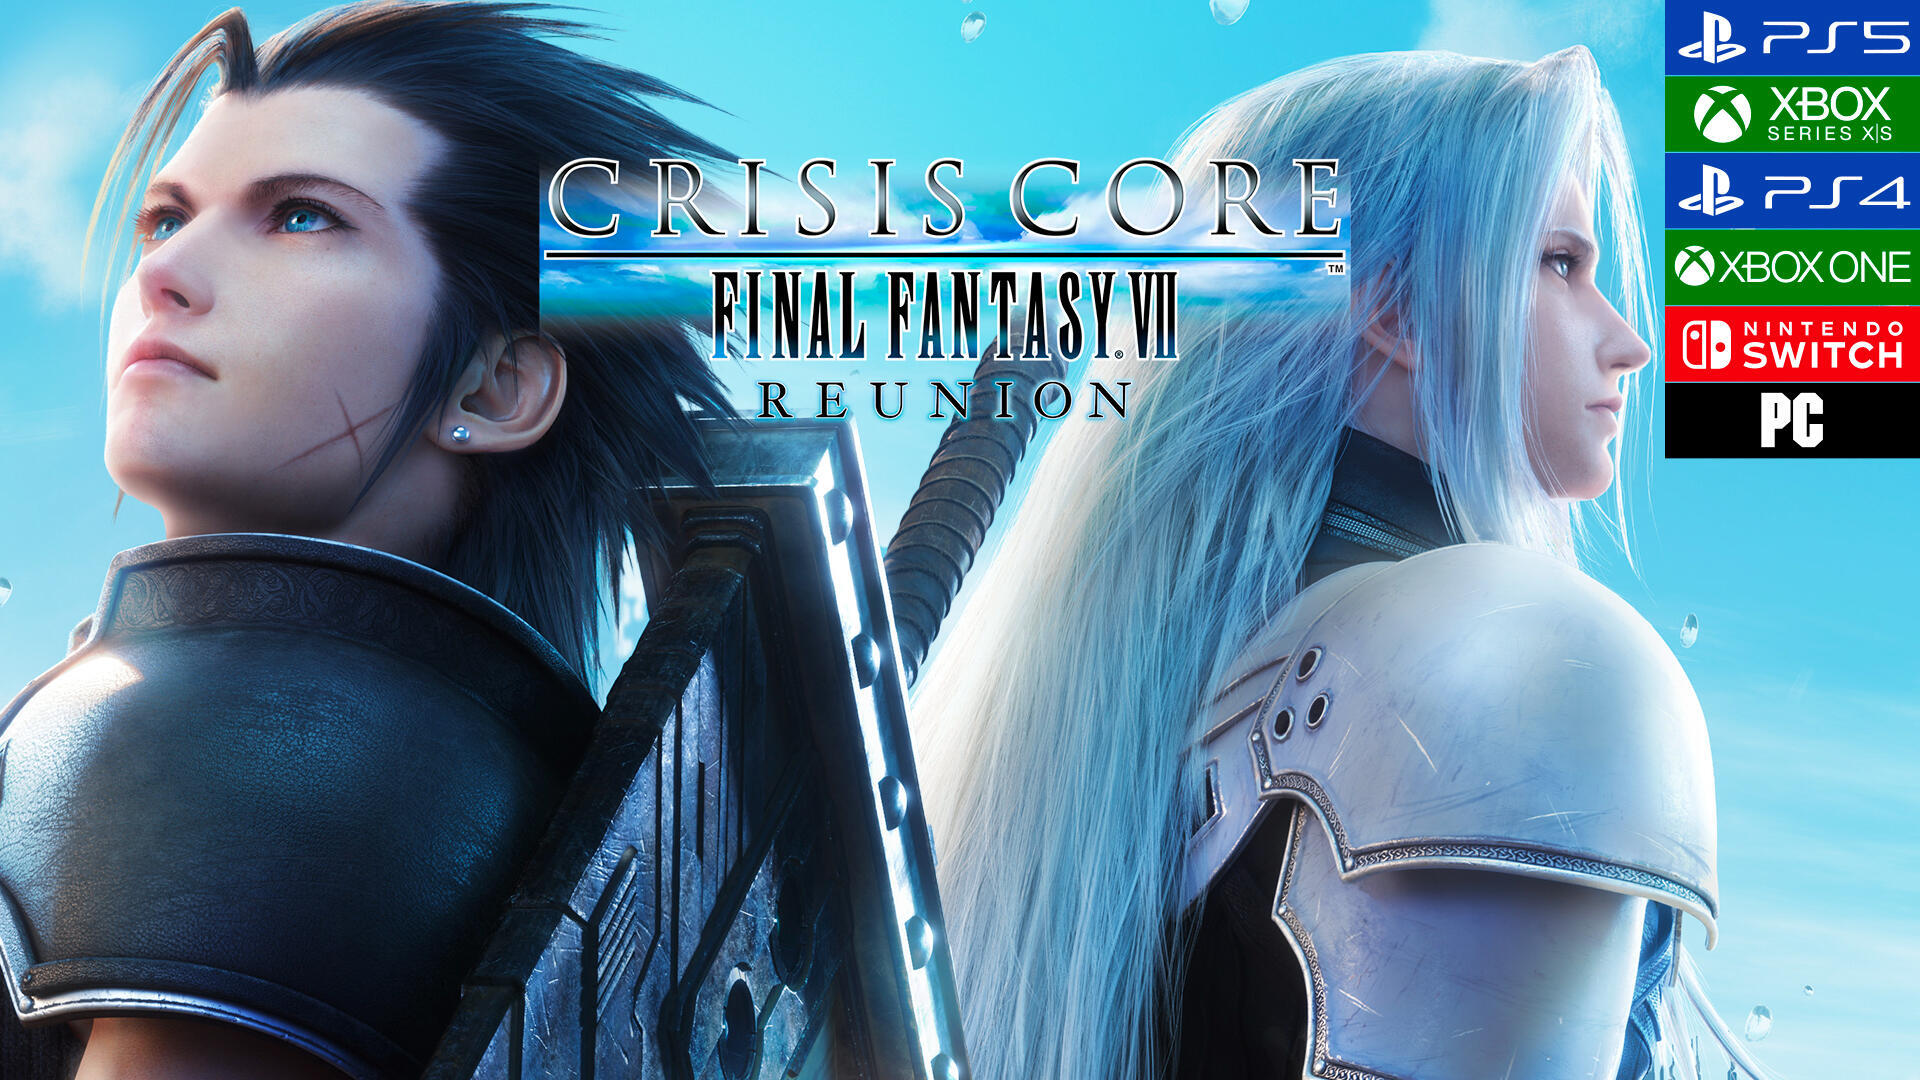 An 225 lisis Crisis Core Final Fantasy VII Reunion la versi 243 n definitiva 